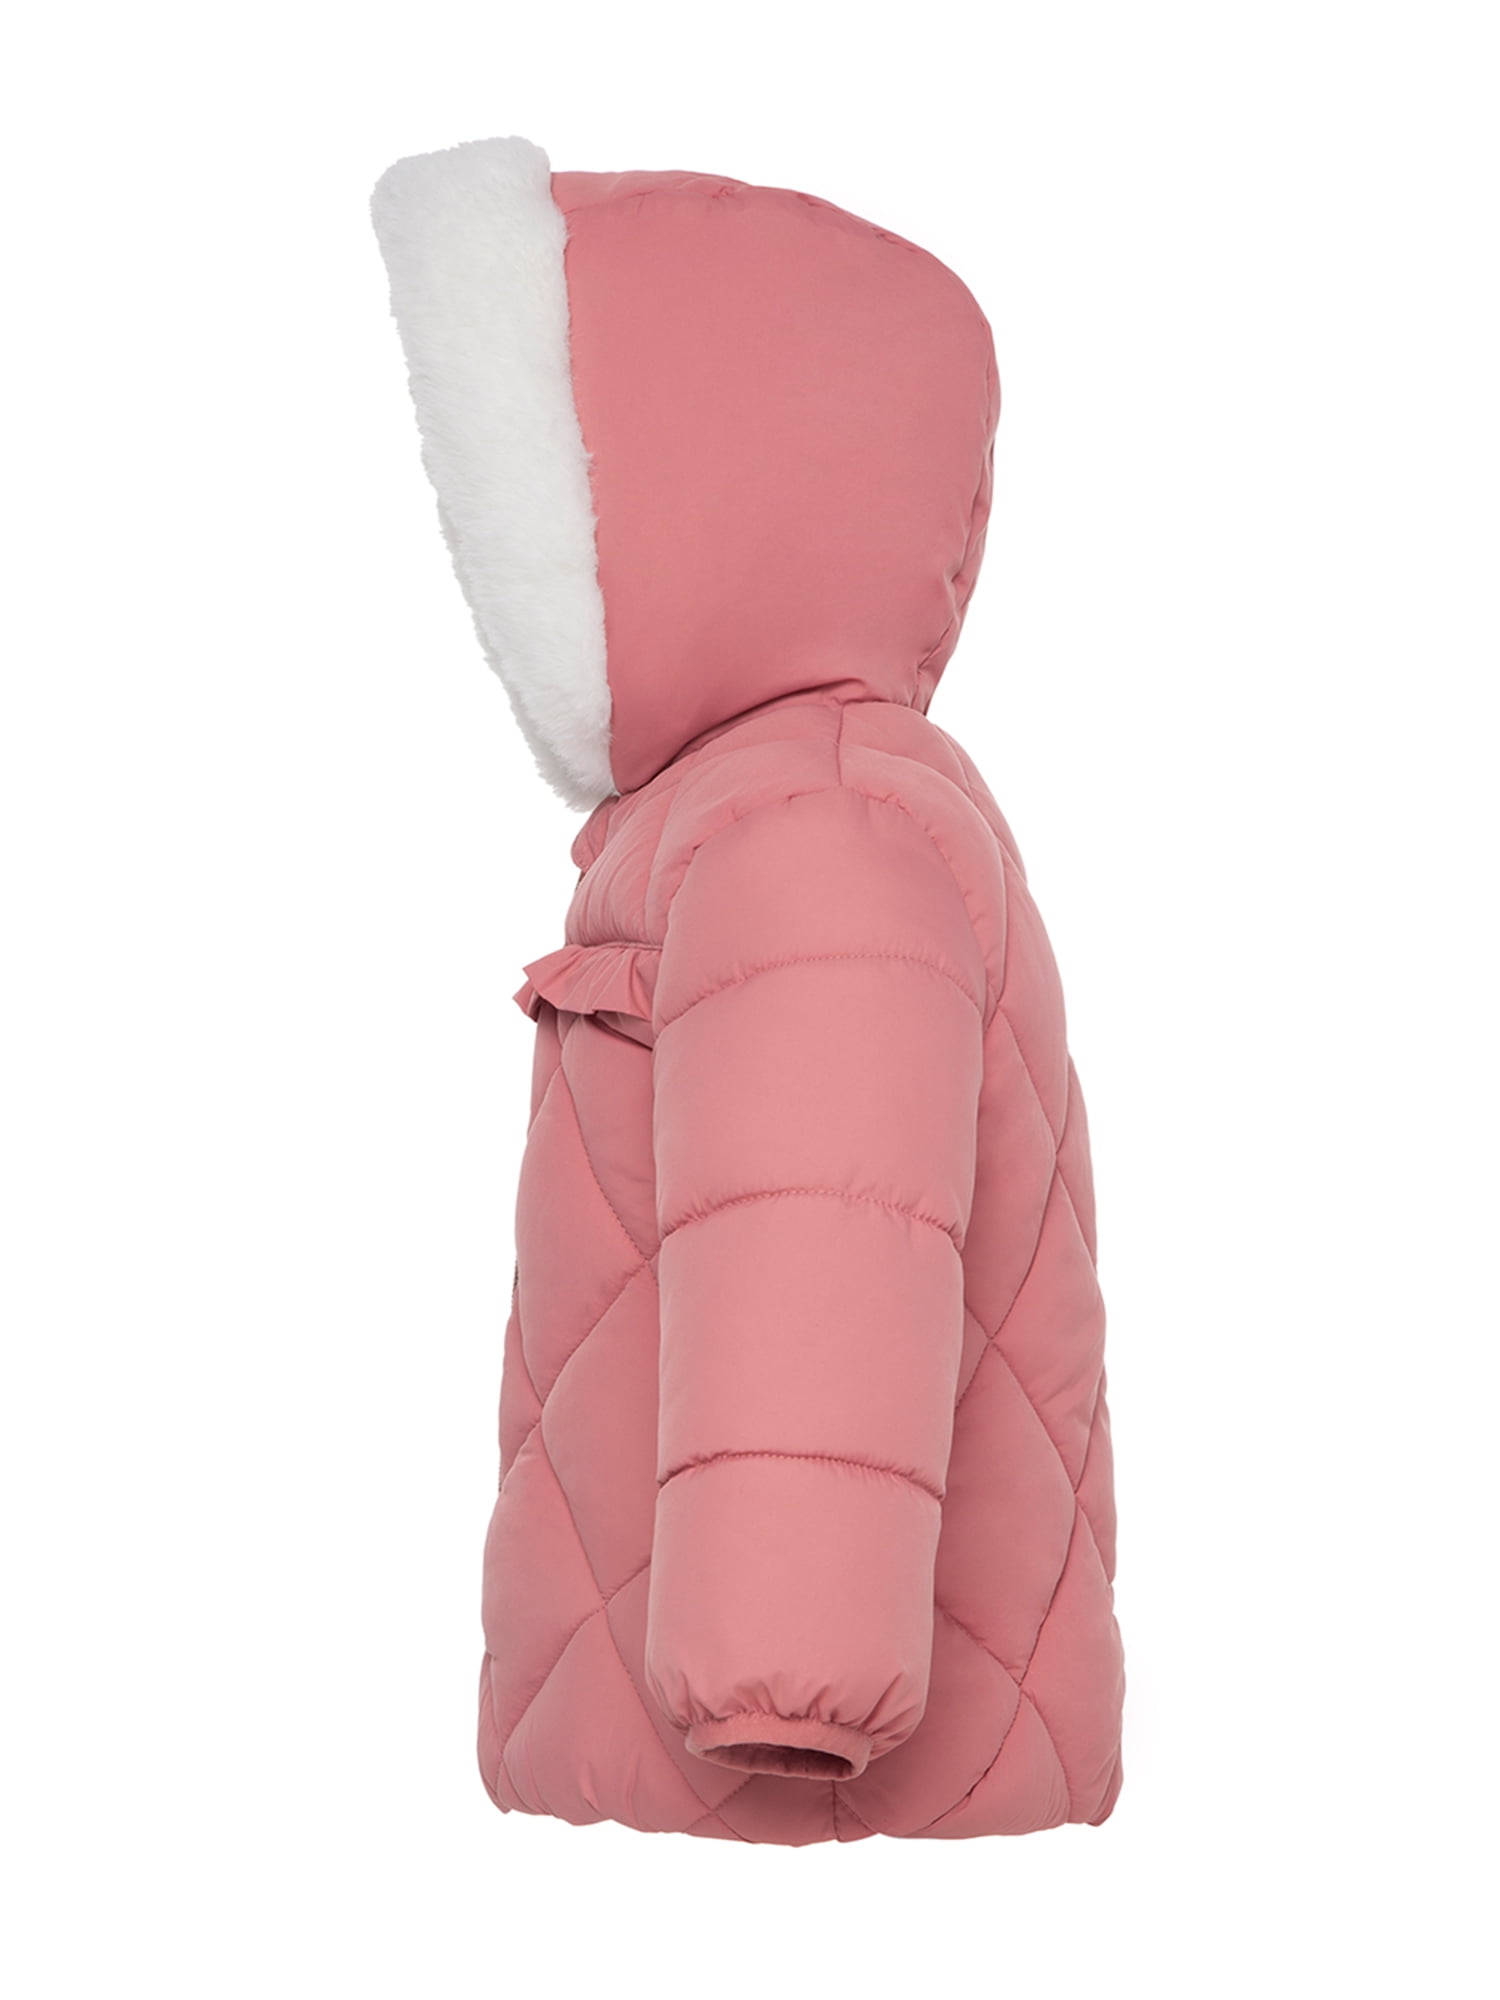 Rokka&Rolla Girls' Reversible Fleece Jacket Puffer Coat-Navy/Rose Pink, Size 18